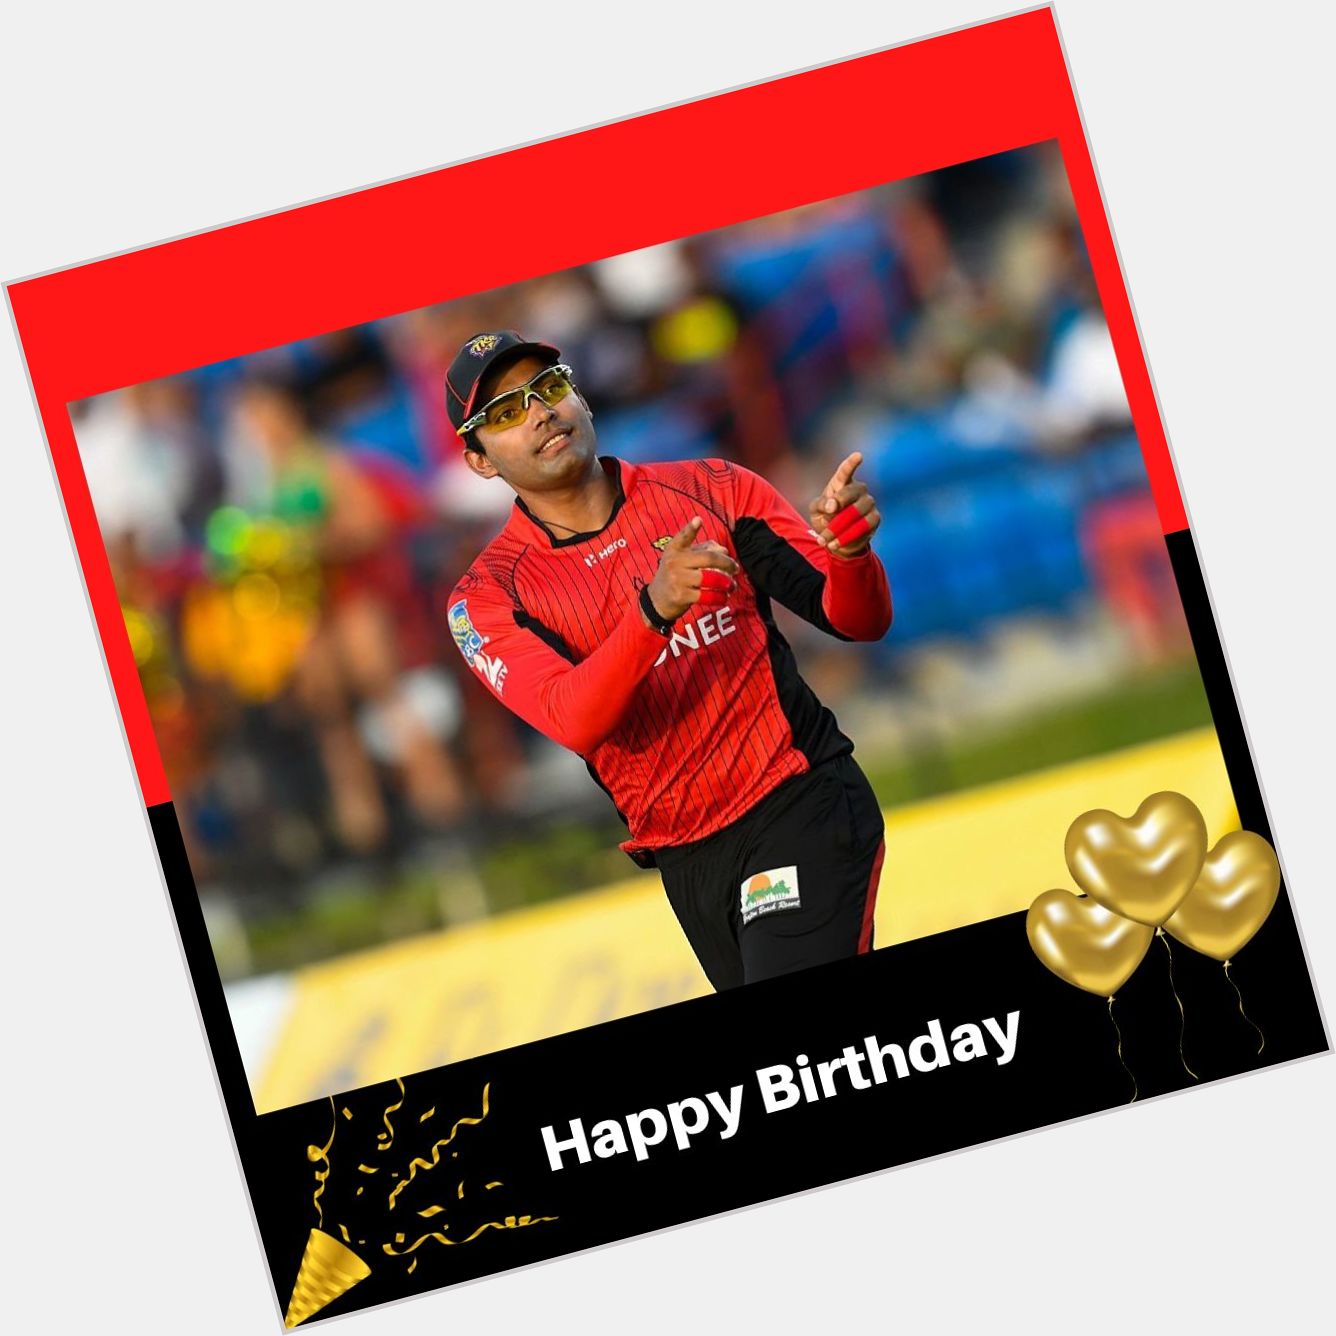 Wishing a very happy birthday to former TKR player Umar Akmal. 